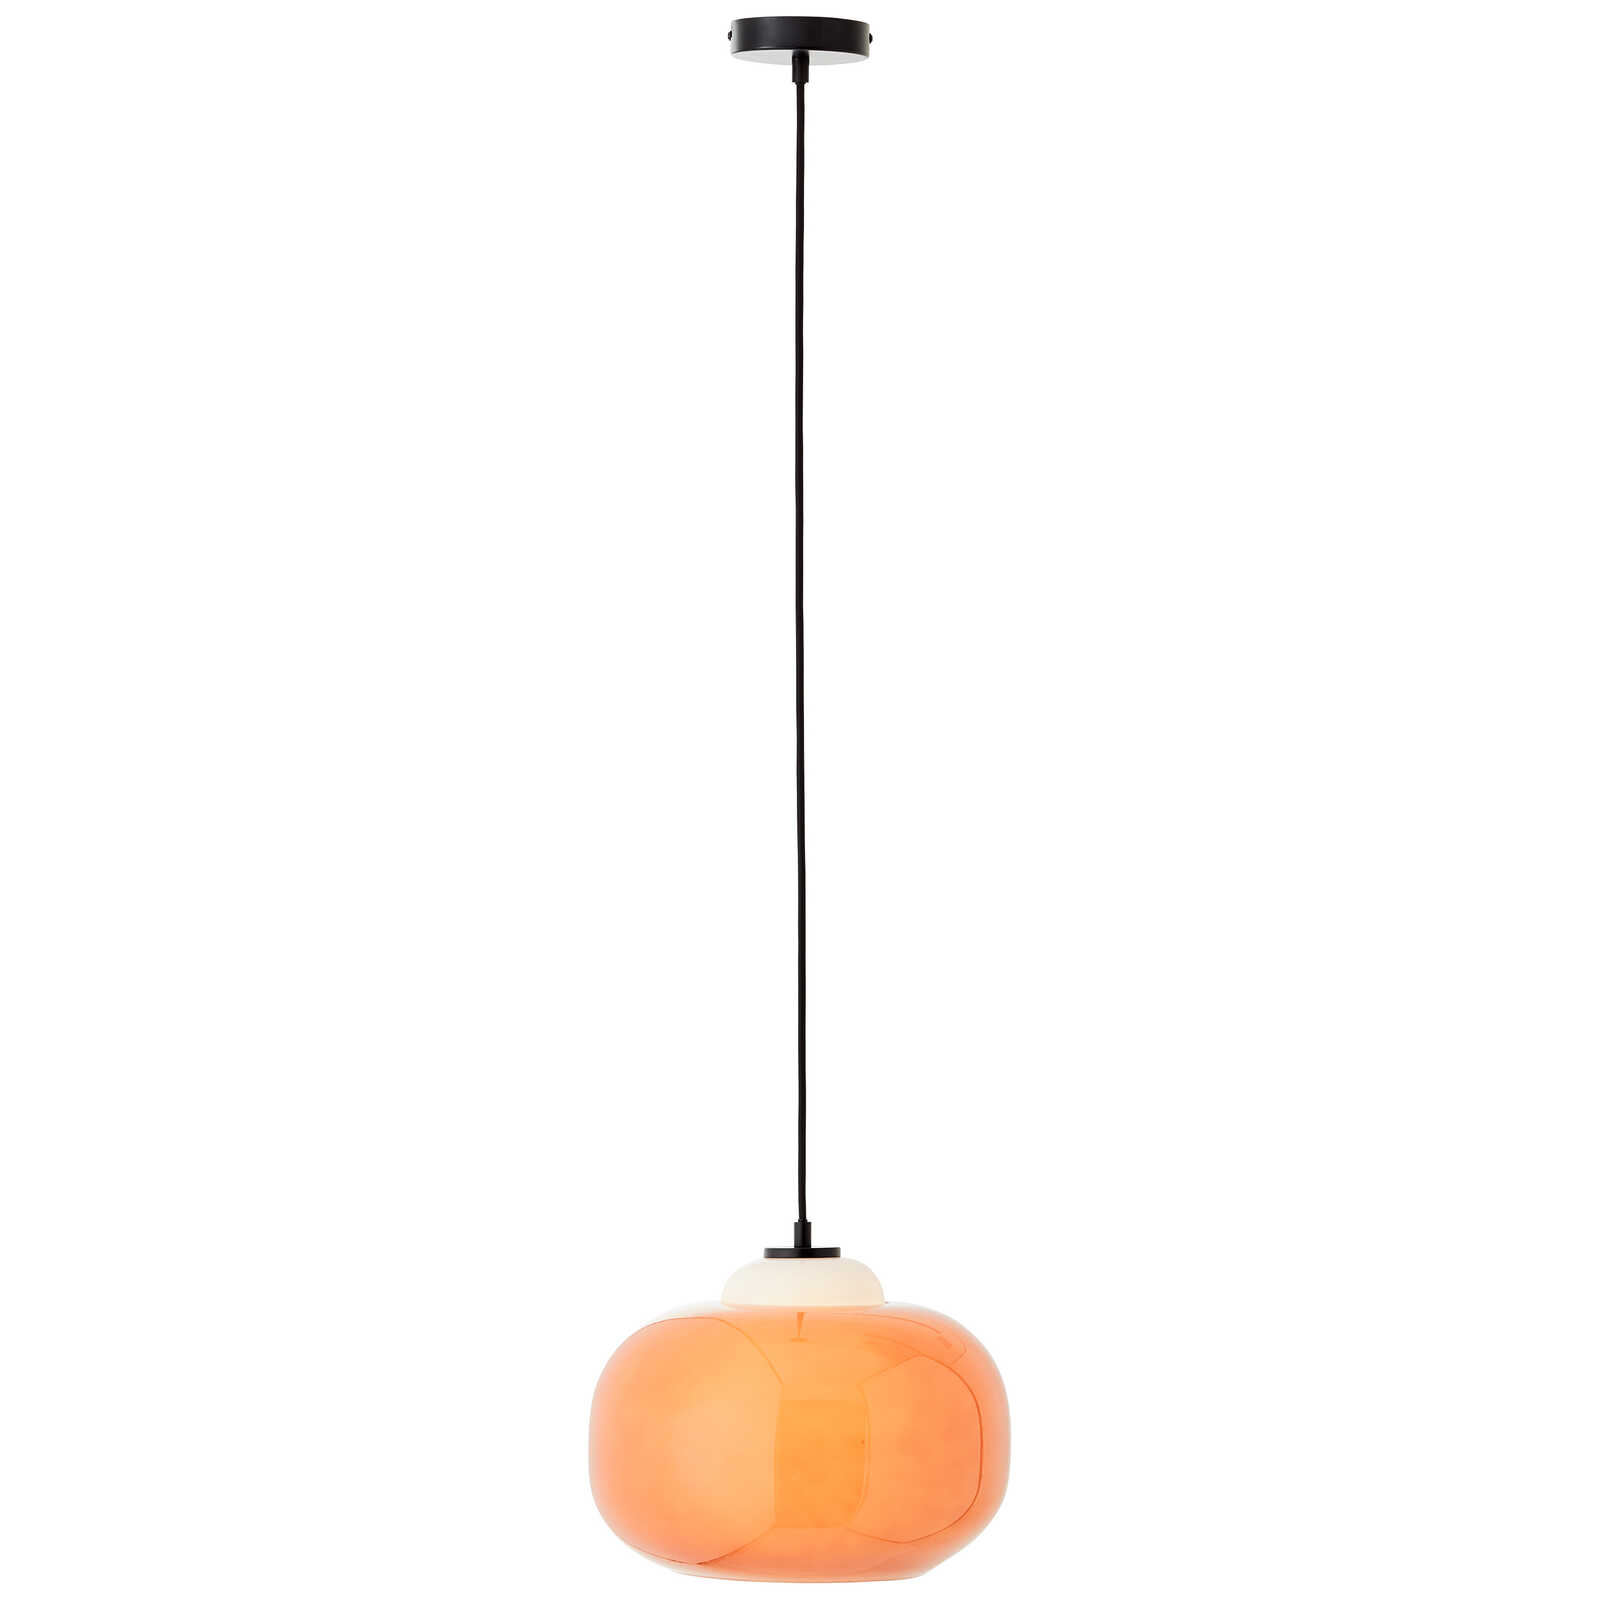             Lámpara colgante de cristal - Carla 2 - Naranja
        